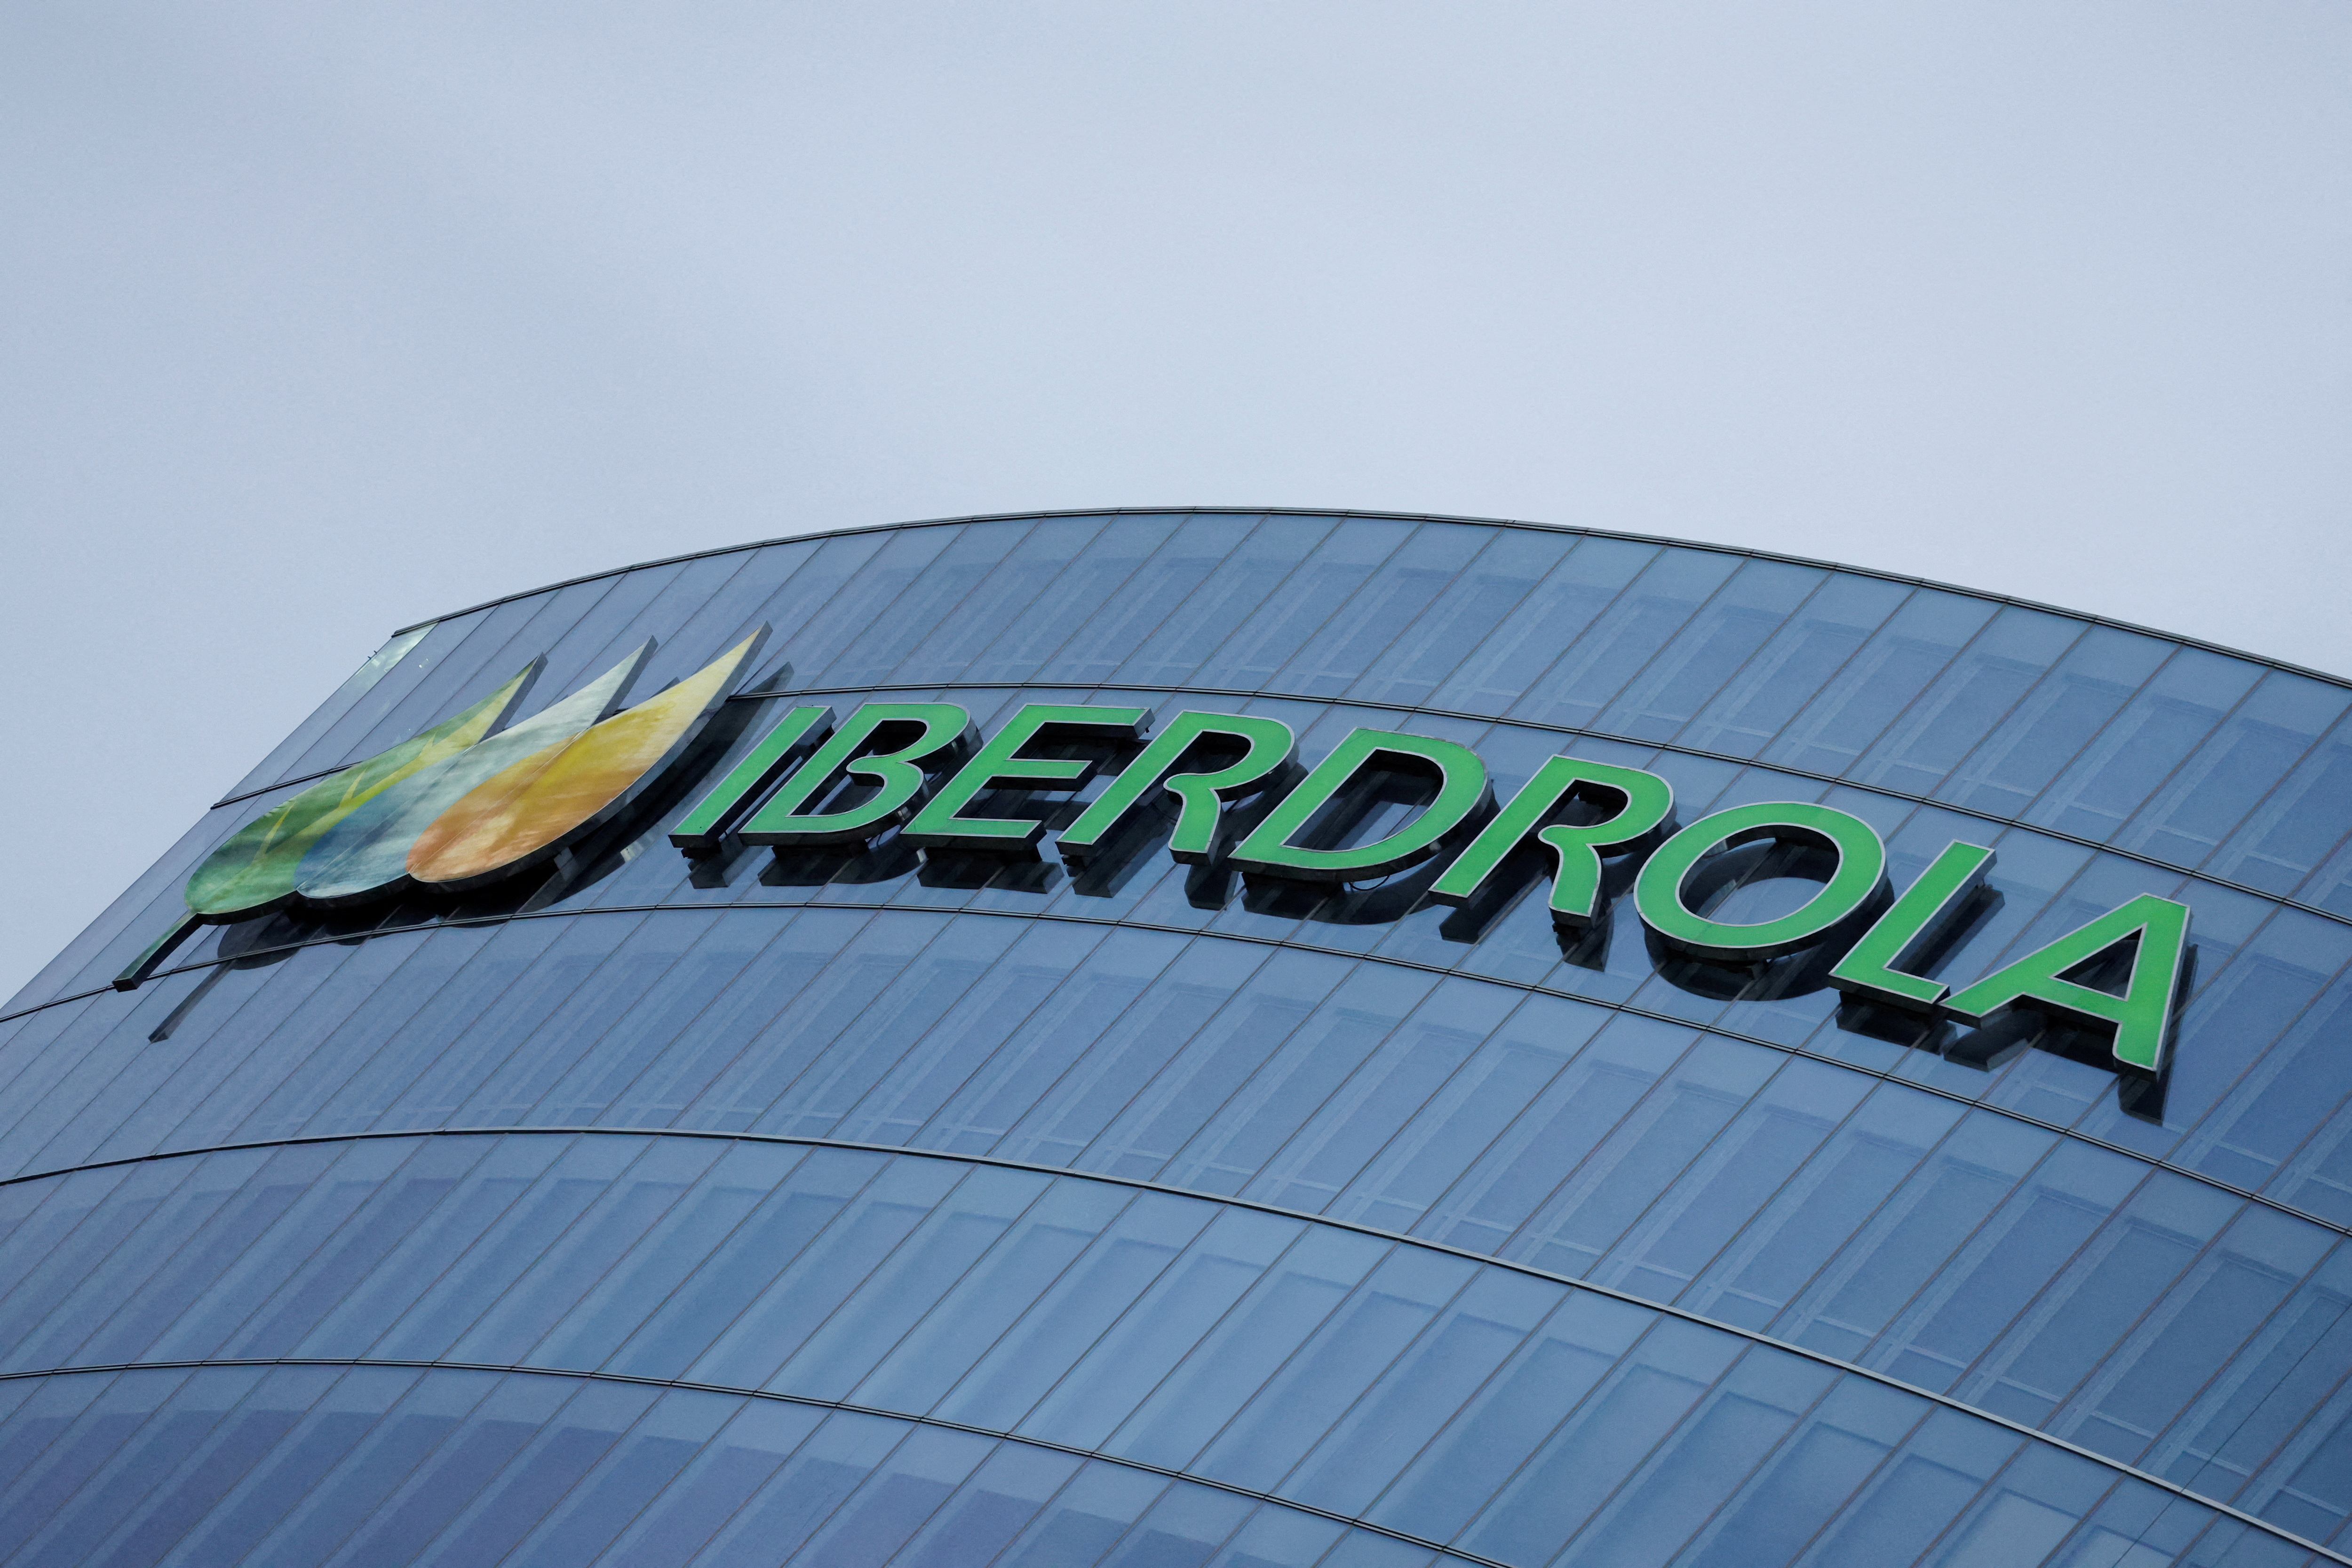 Spanish utility company Iberdrola's headquarters in Bilbao